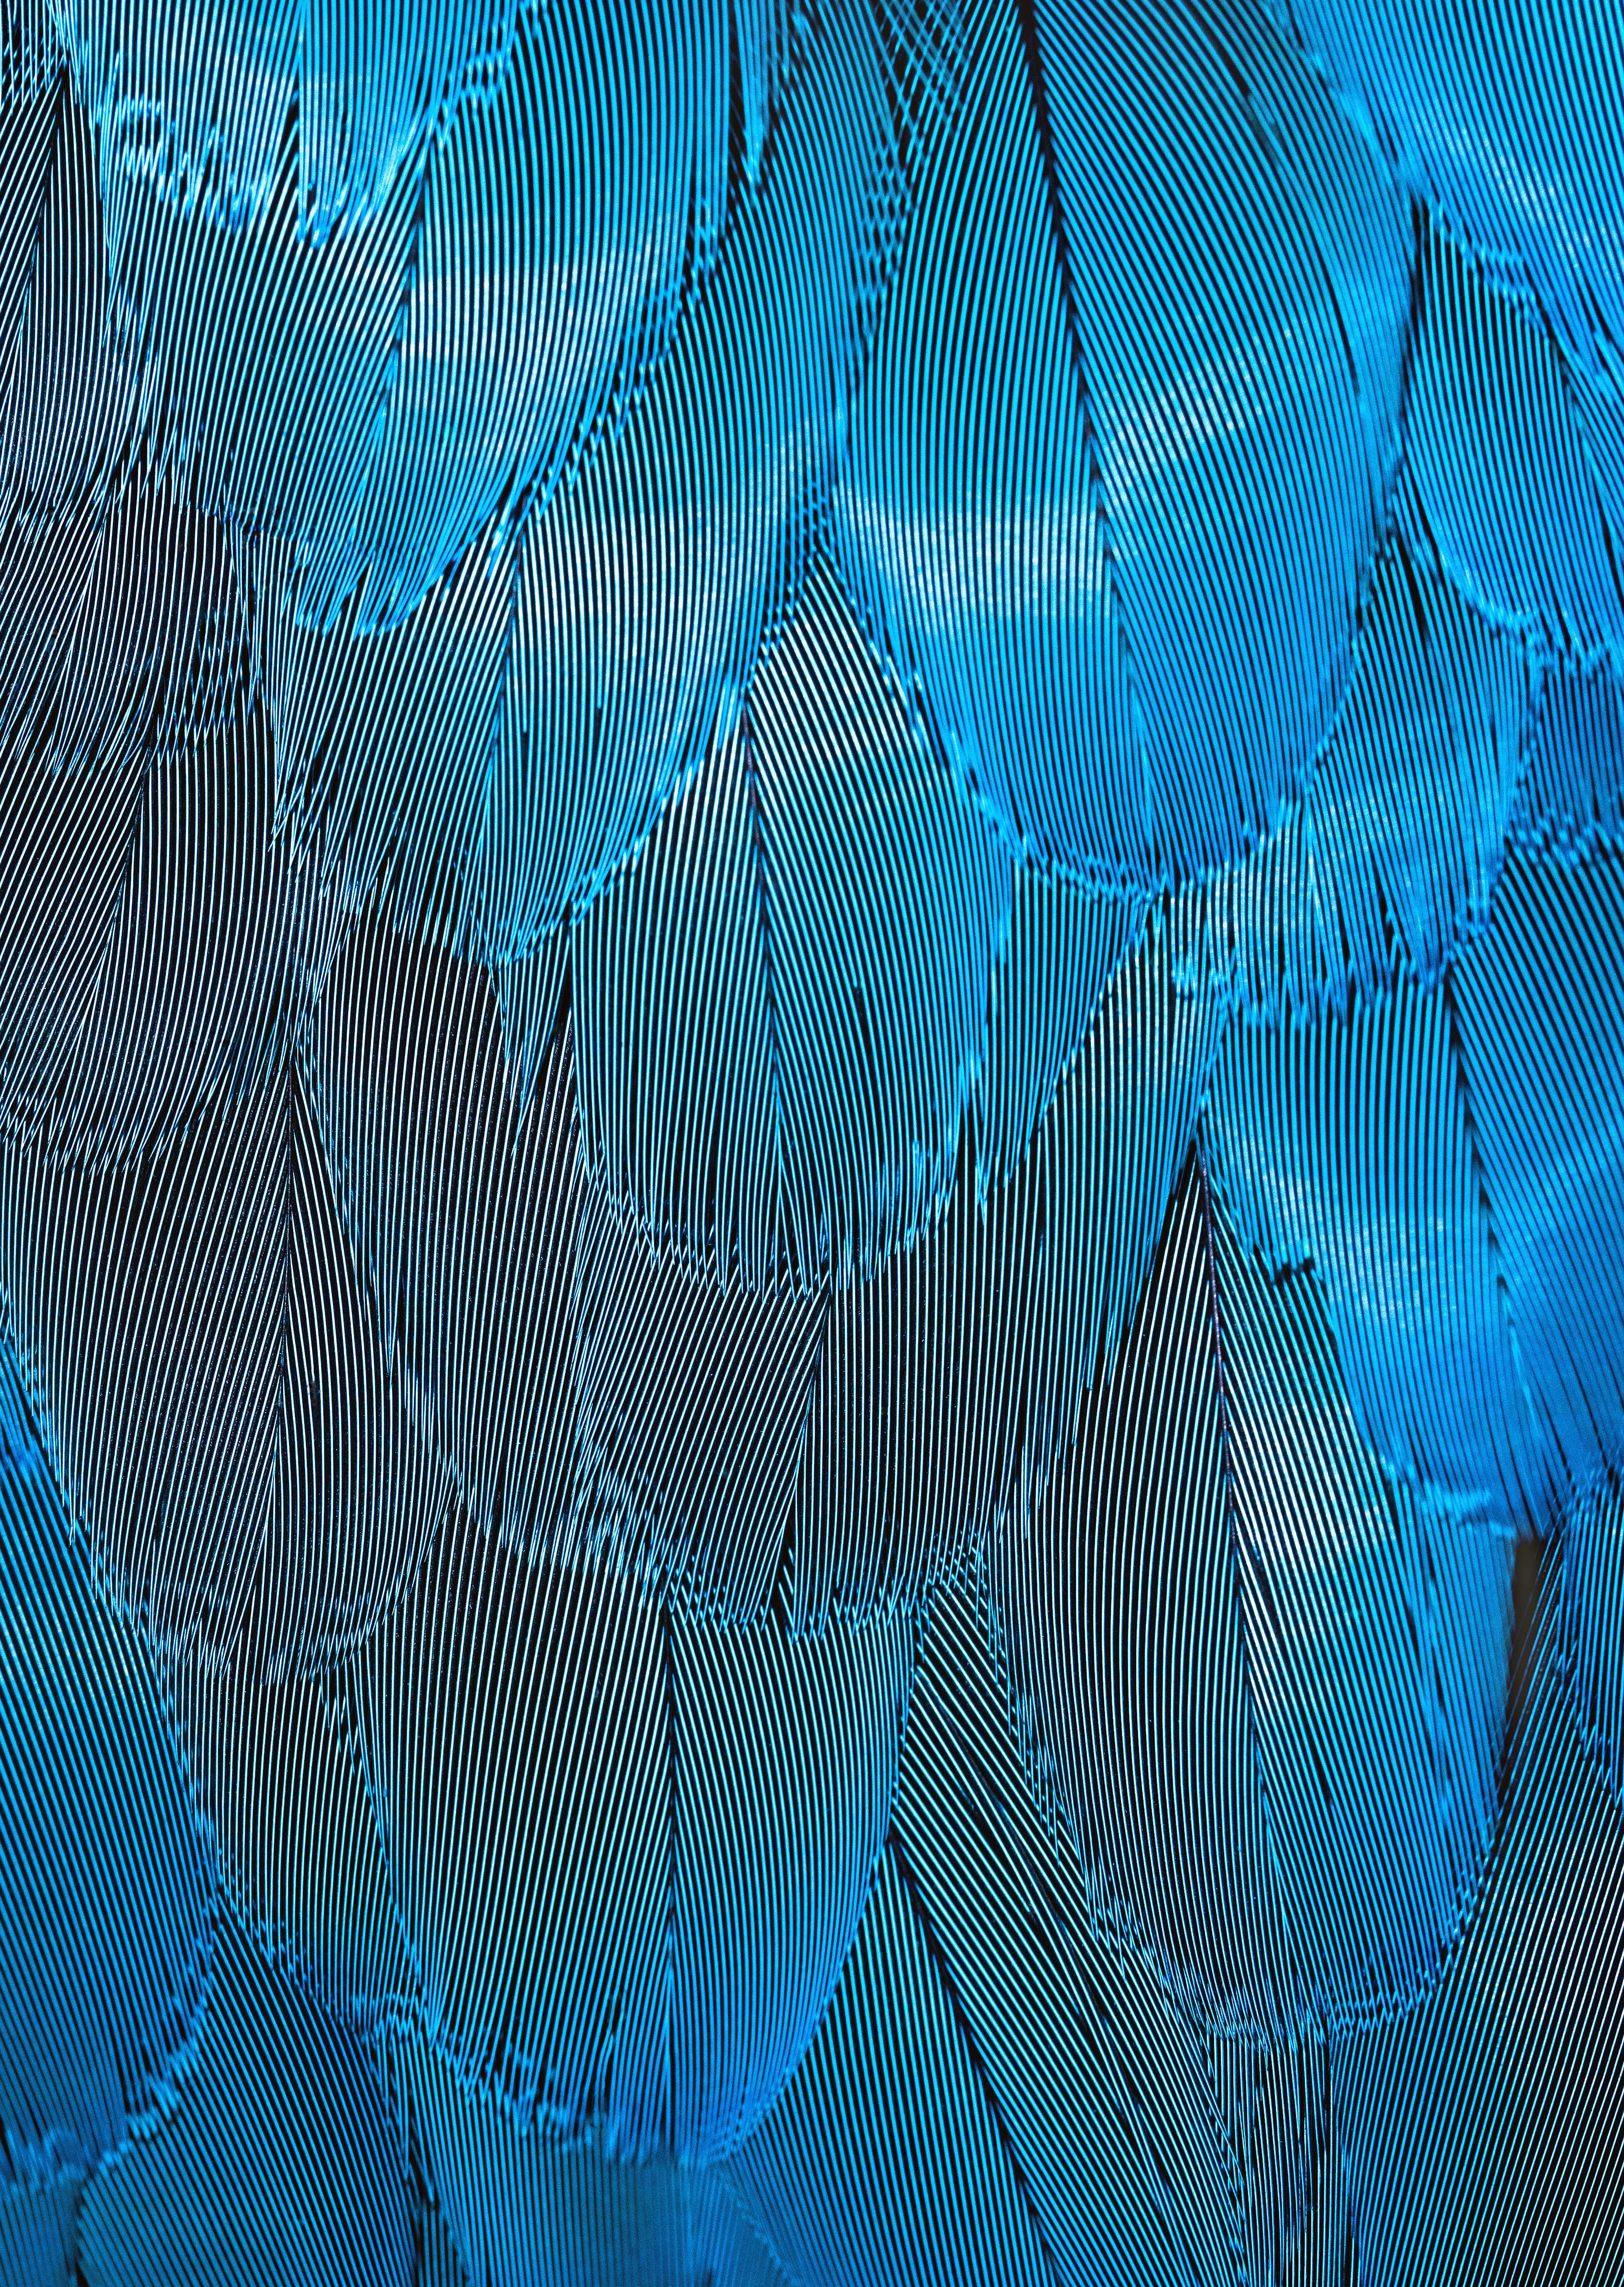 macro, texture, textures, feather, blue, iridescent